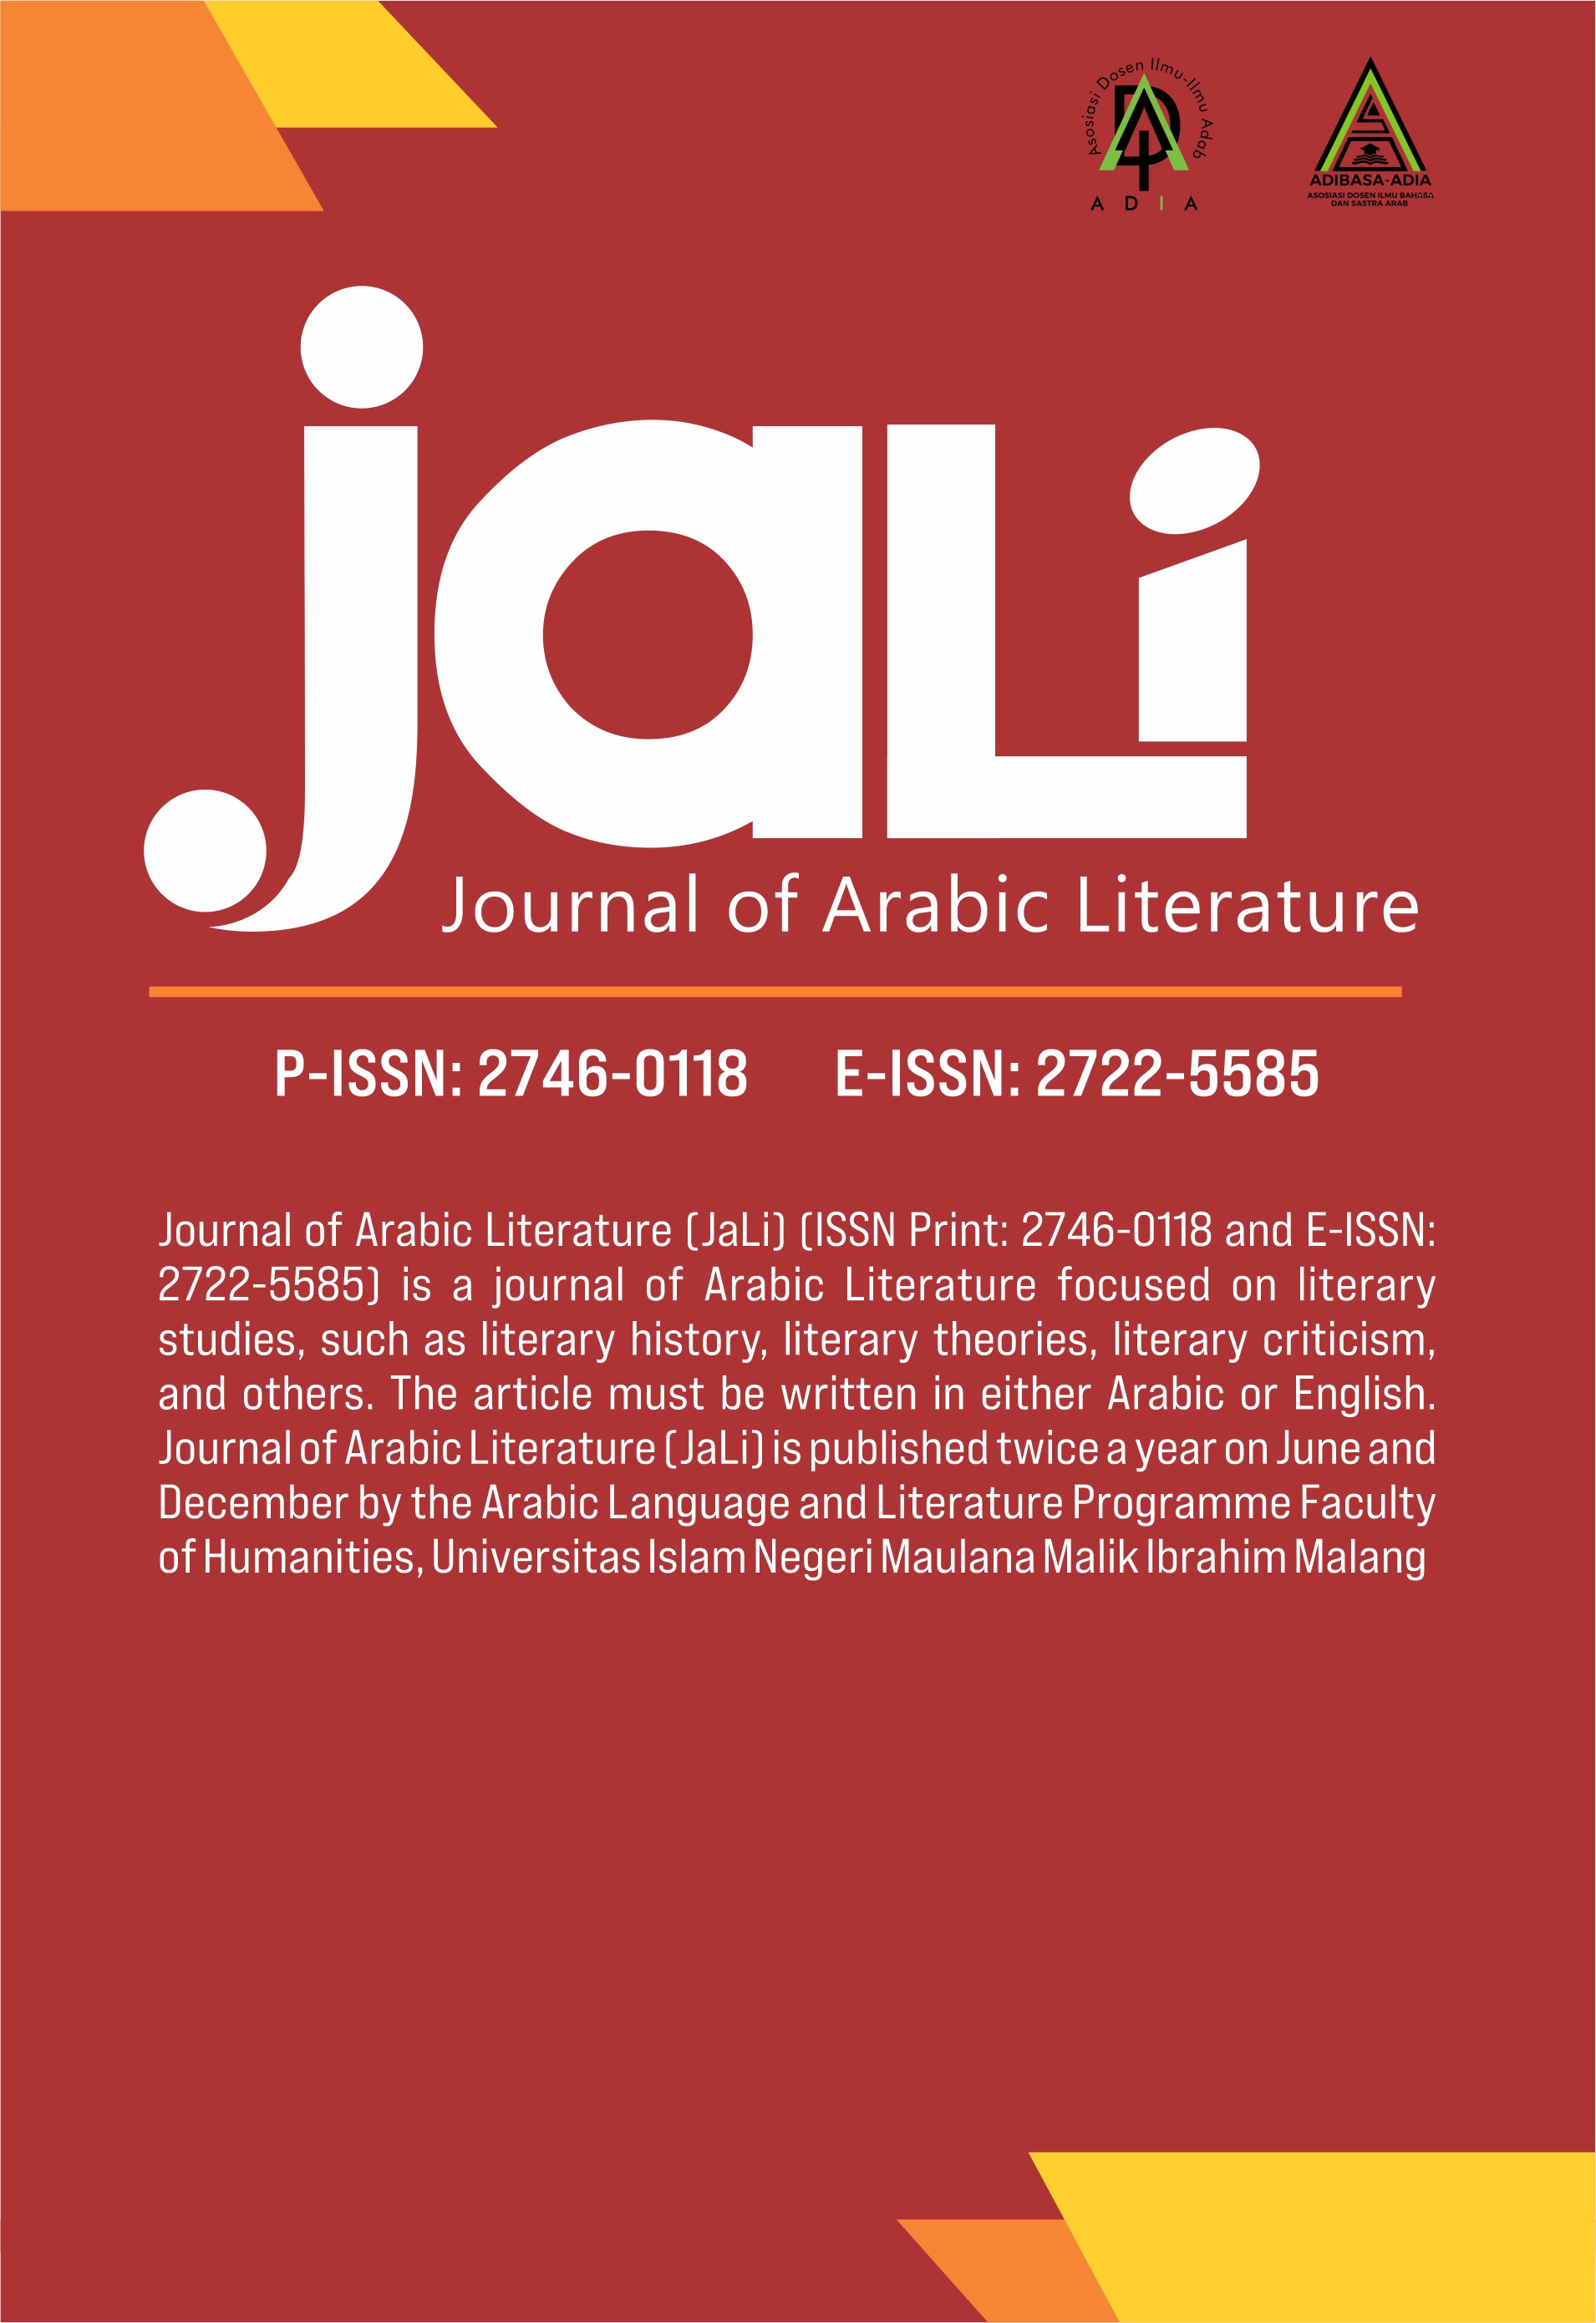 Journal of Arabic Literature (JaLi)